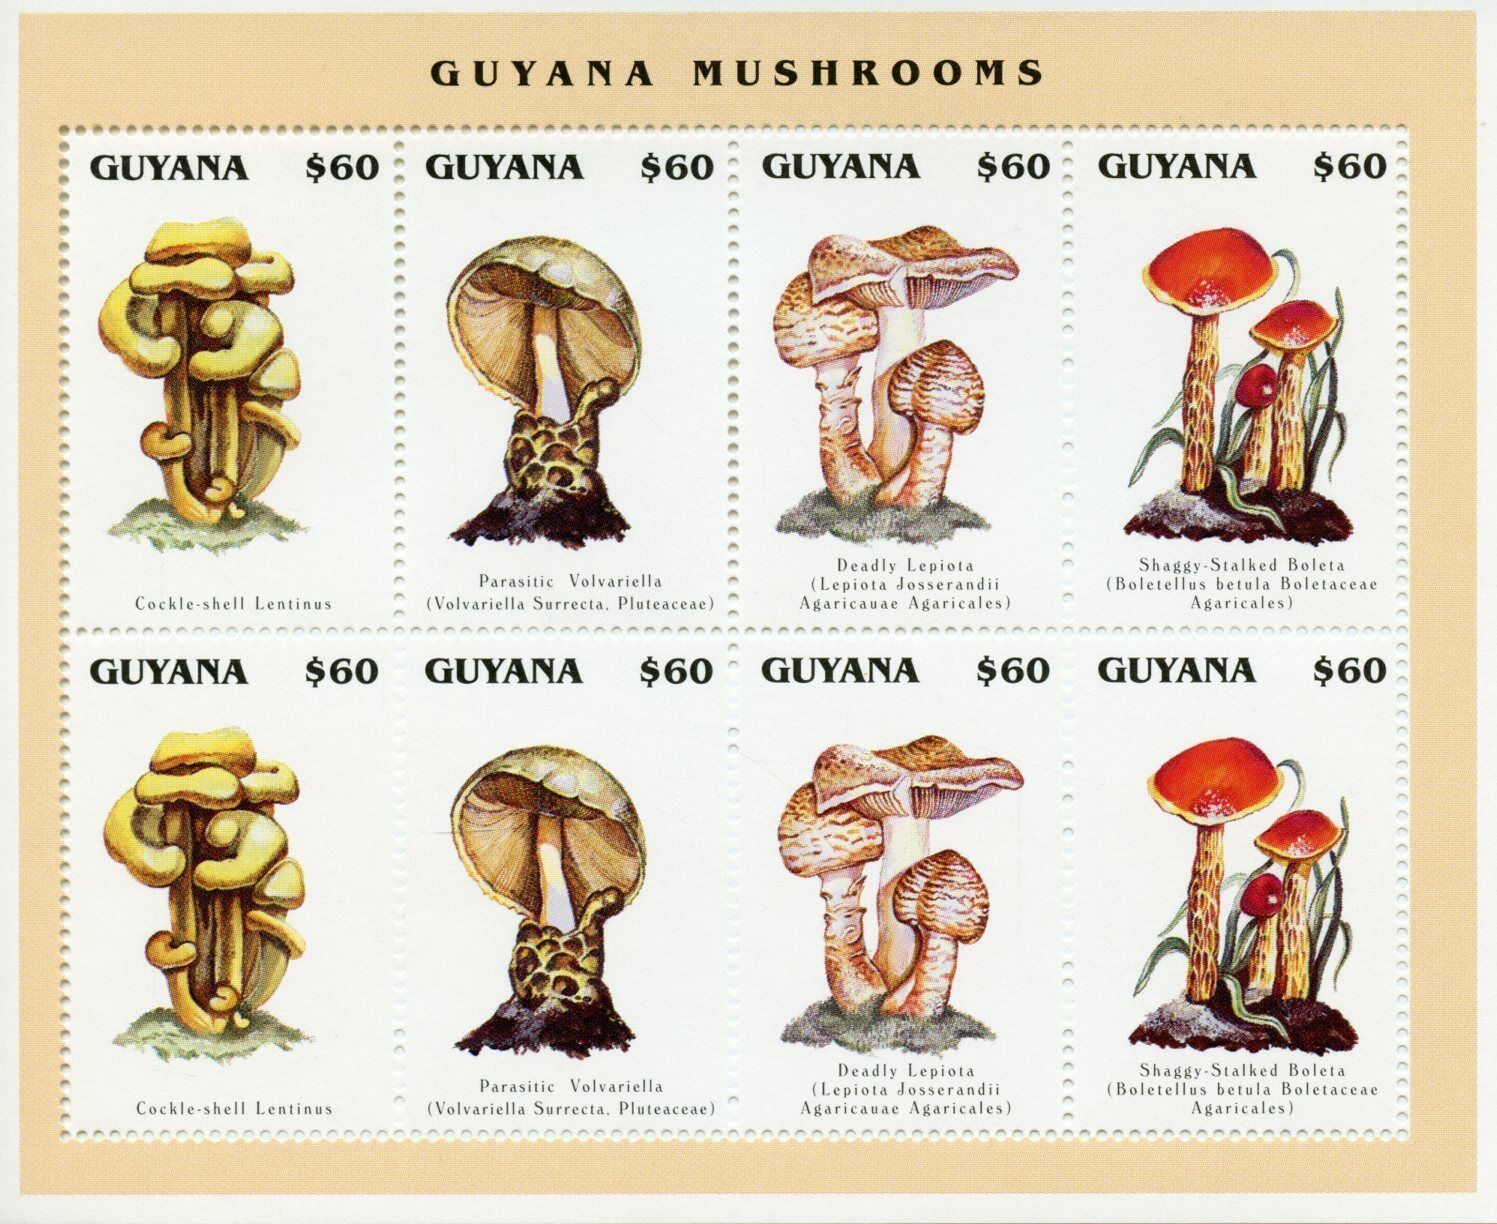 Guyana 1996 MNH Mushrooms Stamps Boleta Lepiota Mushroom Fungi 8v M/S II